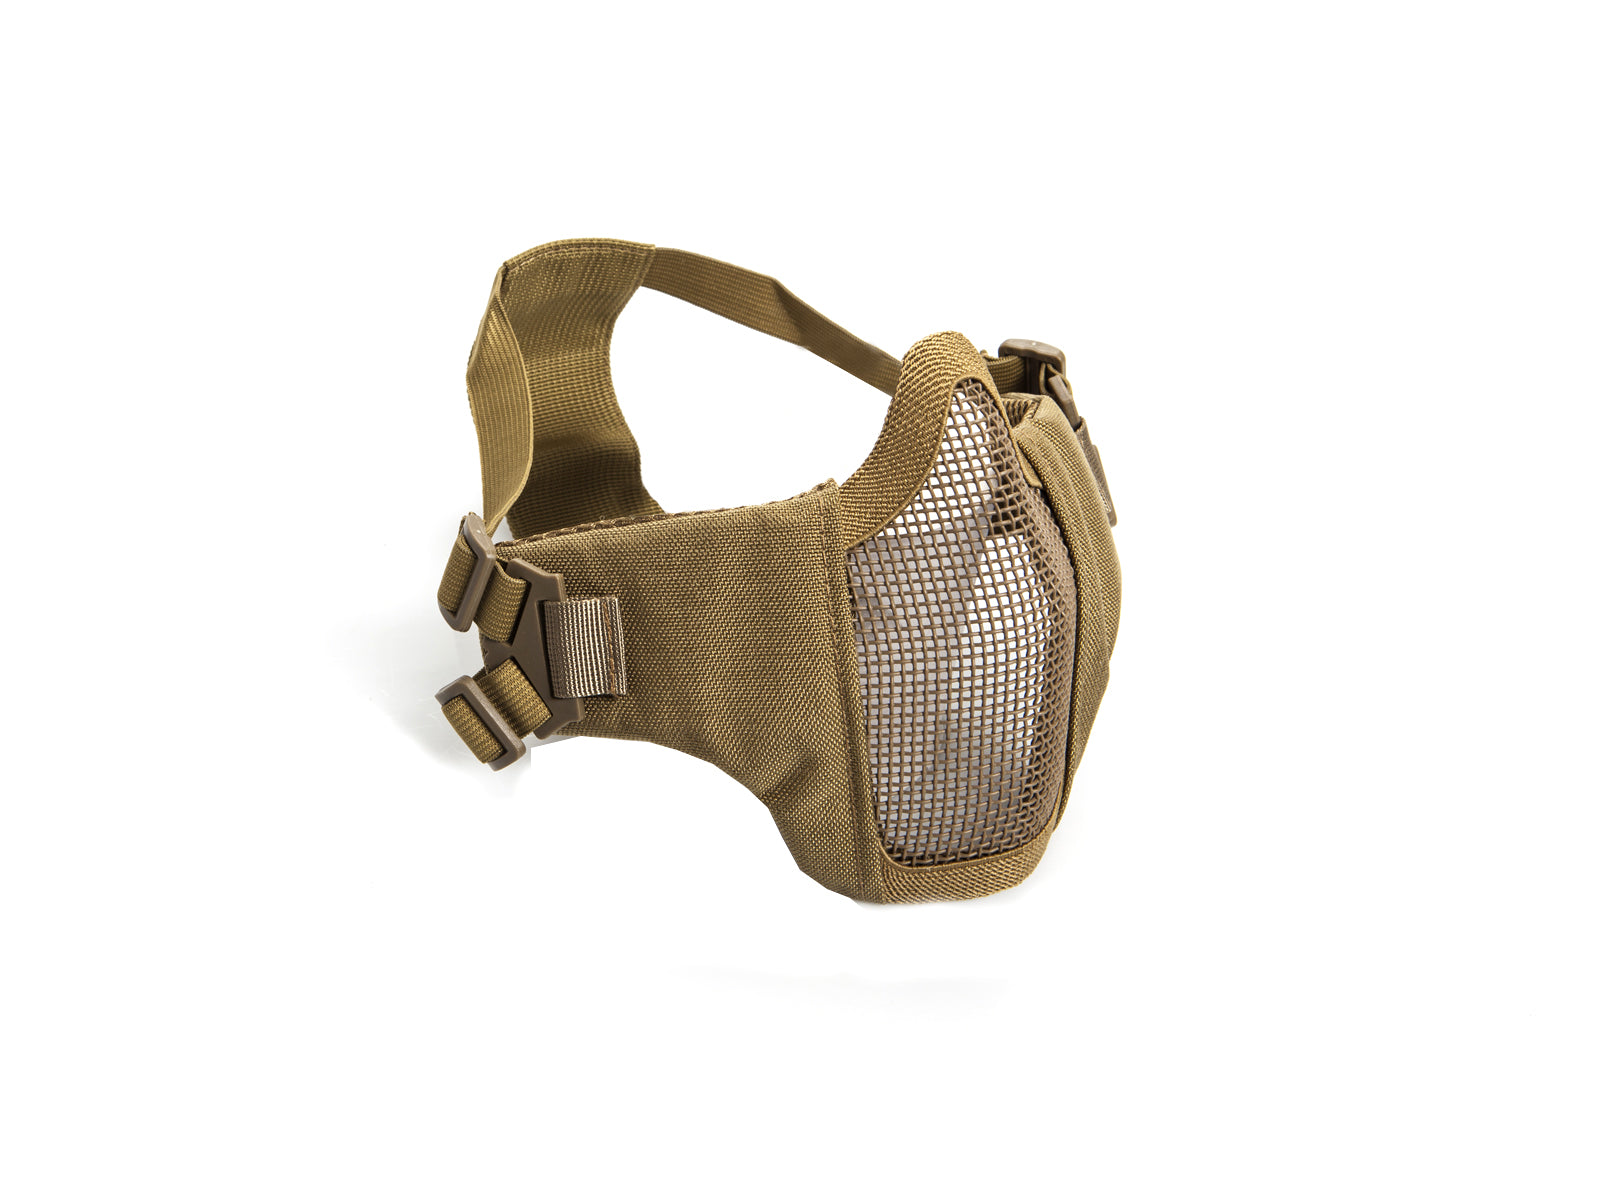 ASG Metal Mesh Airsoft Mask w/ Cheek Pad – Desert Tan